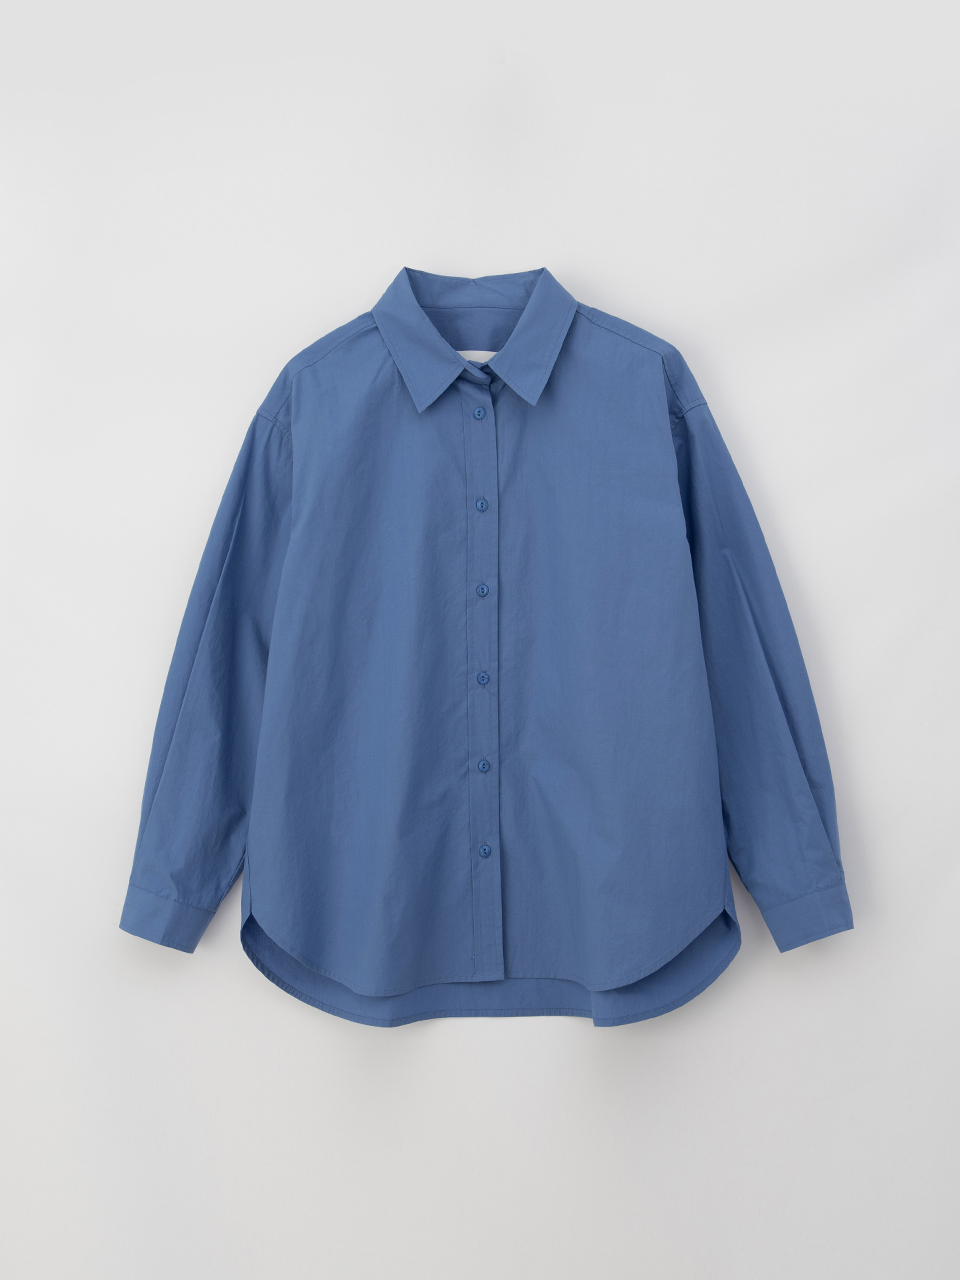 standard overfit shirts - santorini blueBRENDA BRENDEN